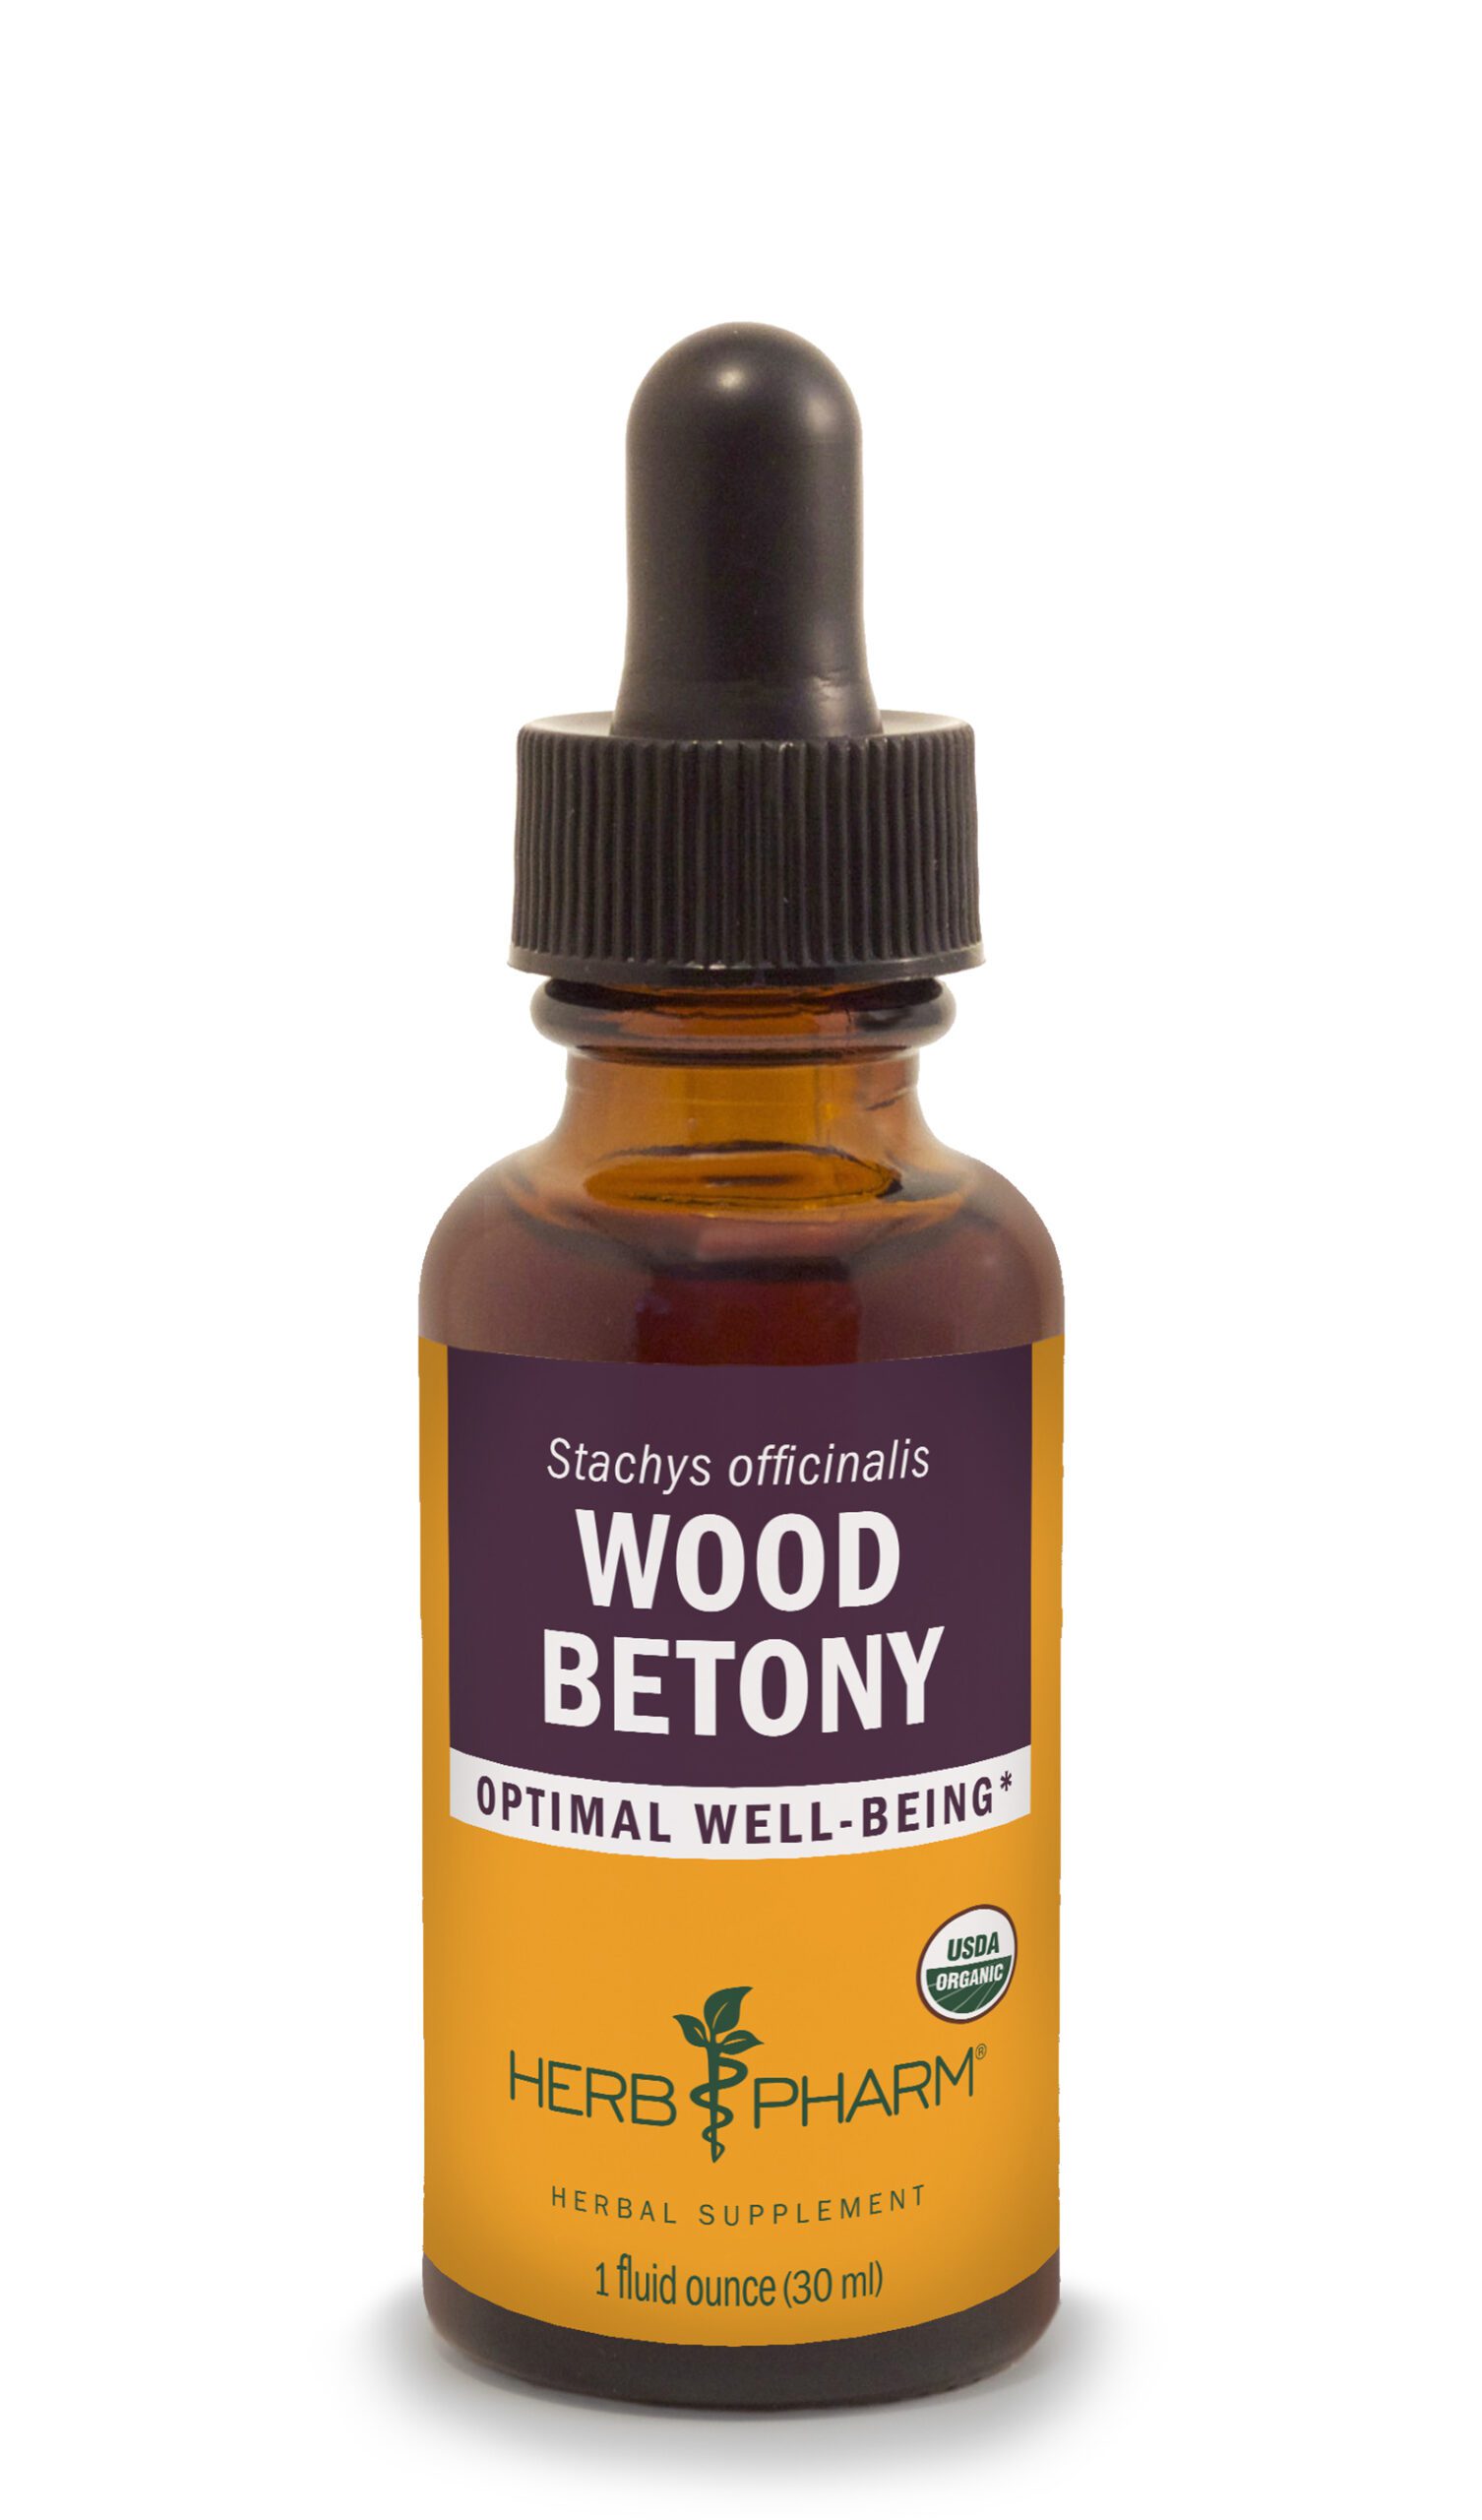 Product Listing Image for Herb Pharm Wood Betony Tincture 1oz